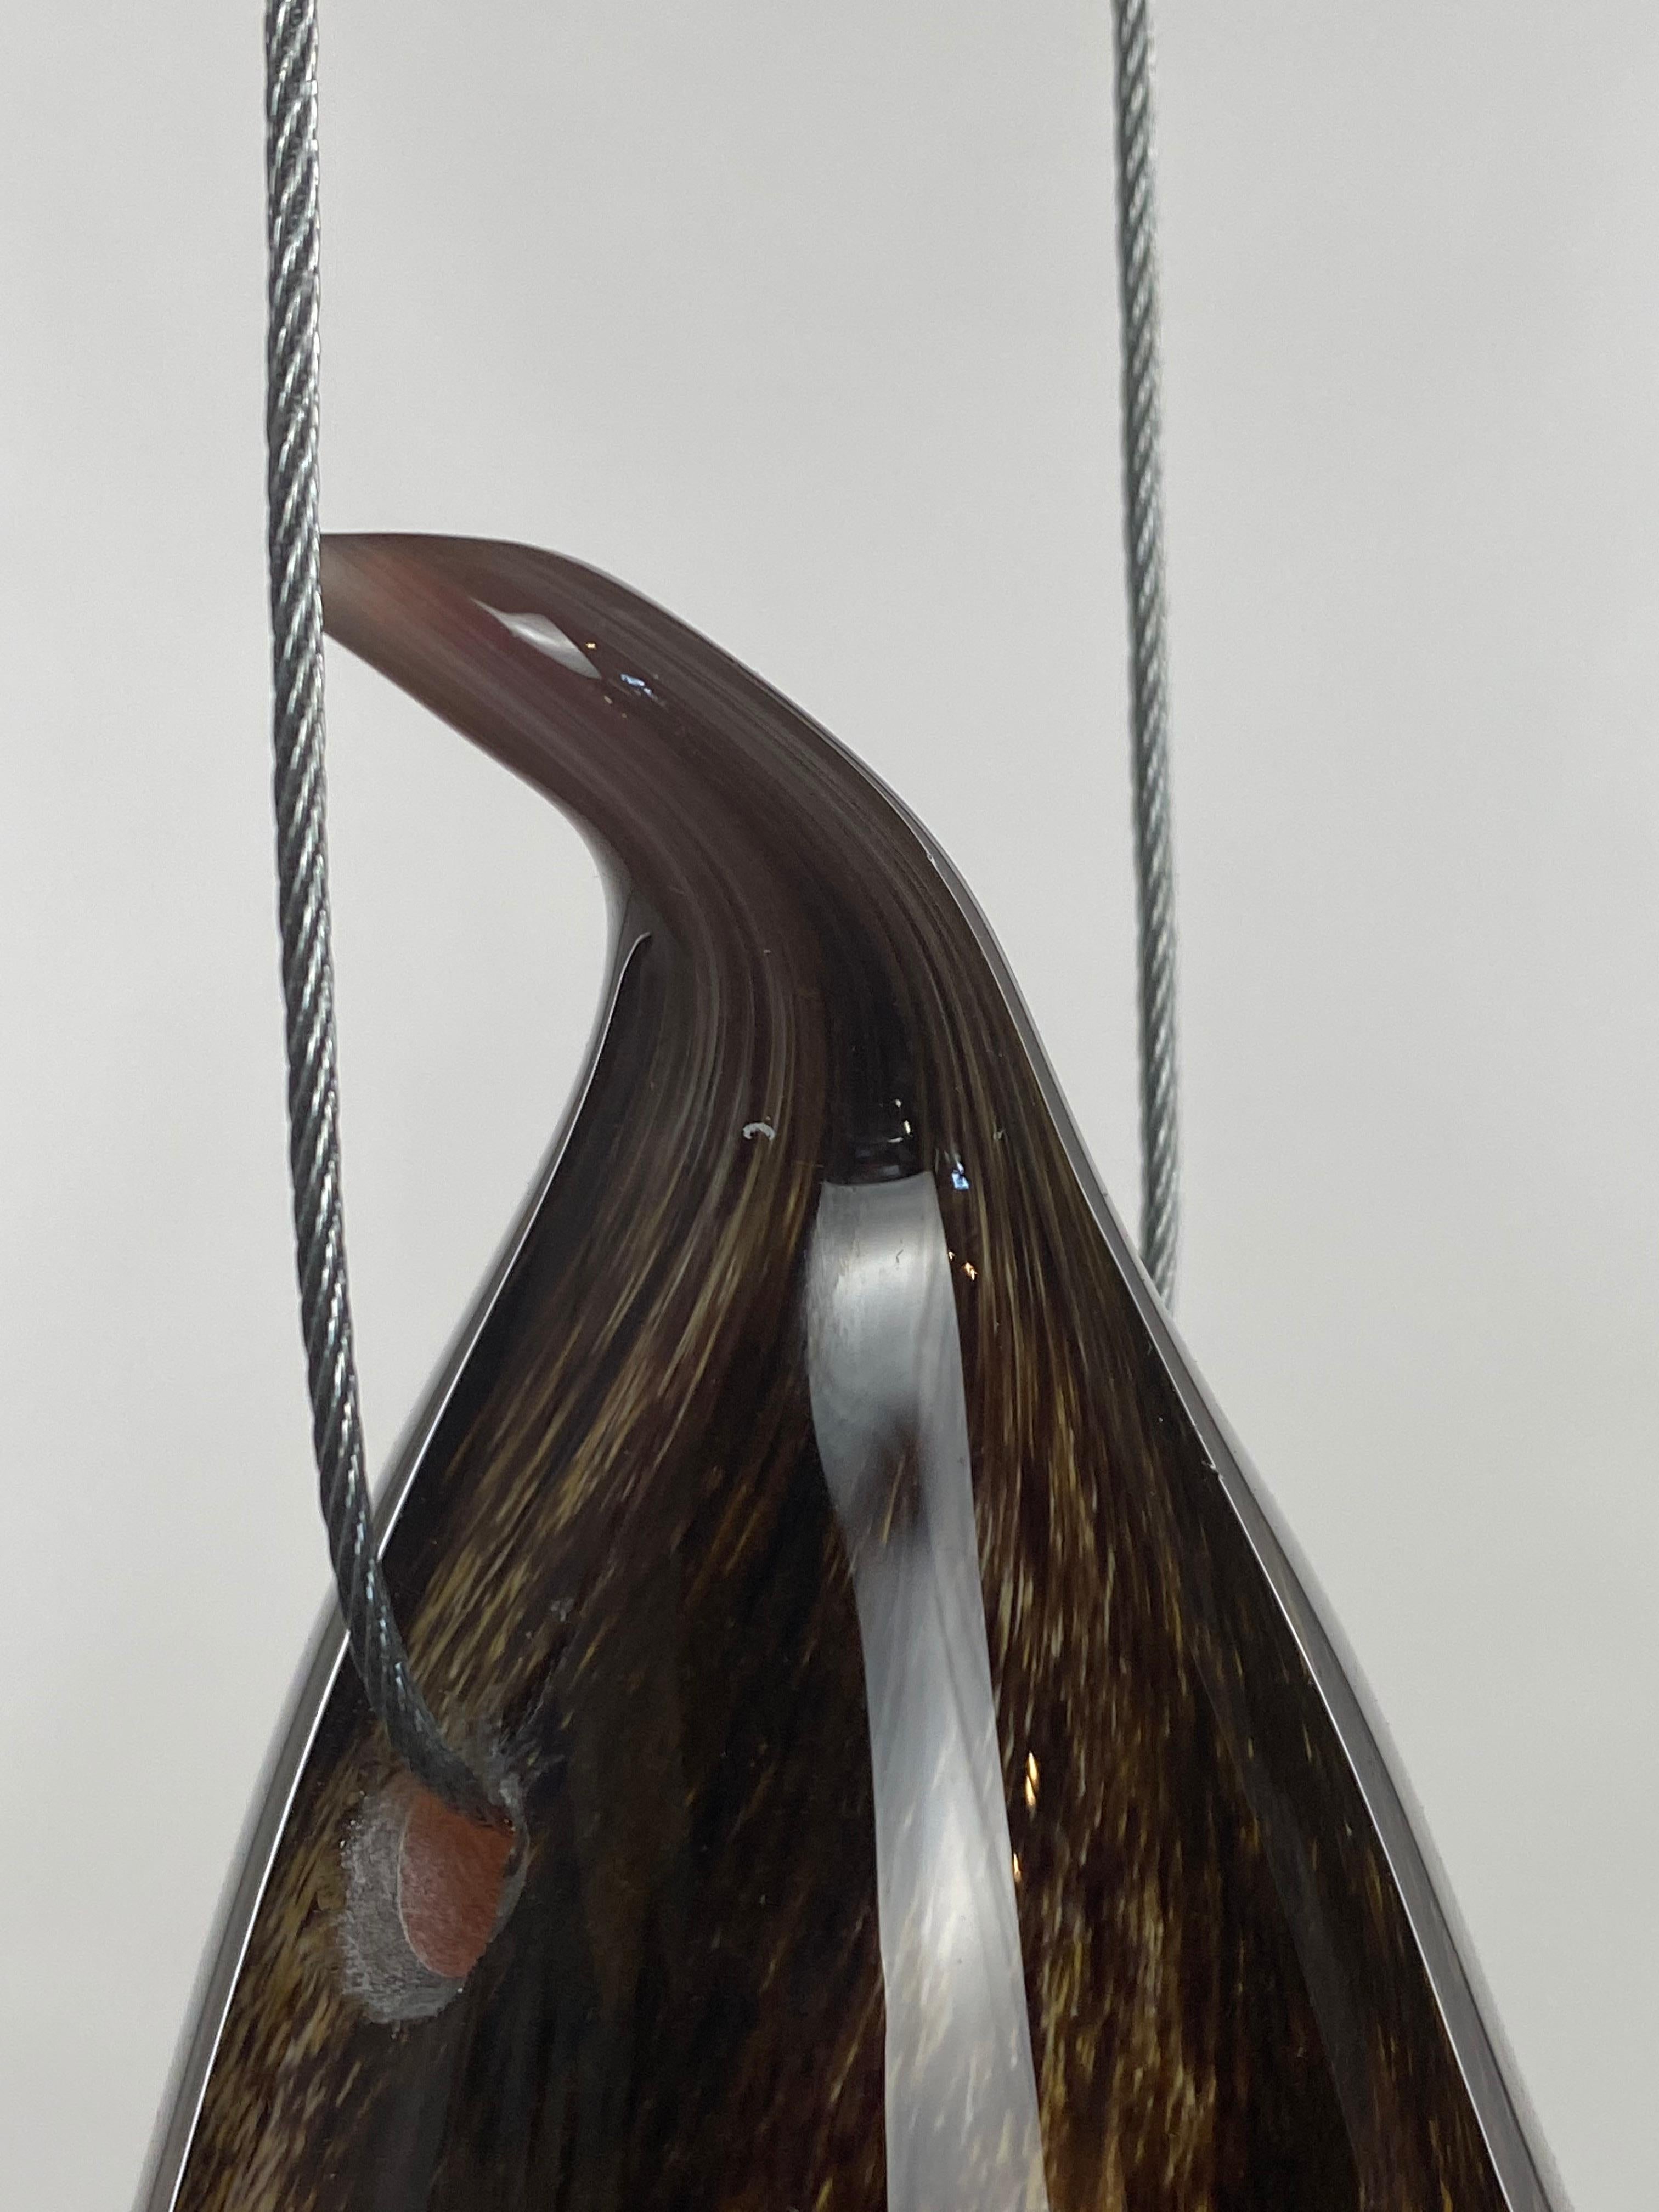 Blown Glass Brown Orange Lamp Pendent Light, 21st Century by Mattia Biagi For Sale 2